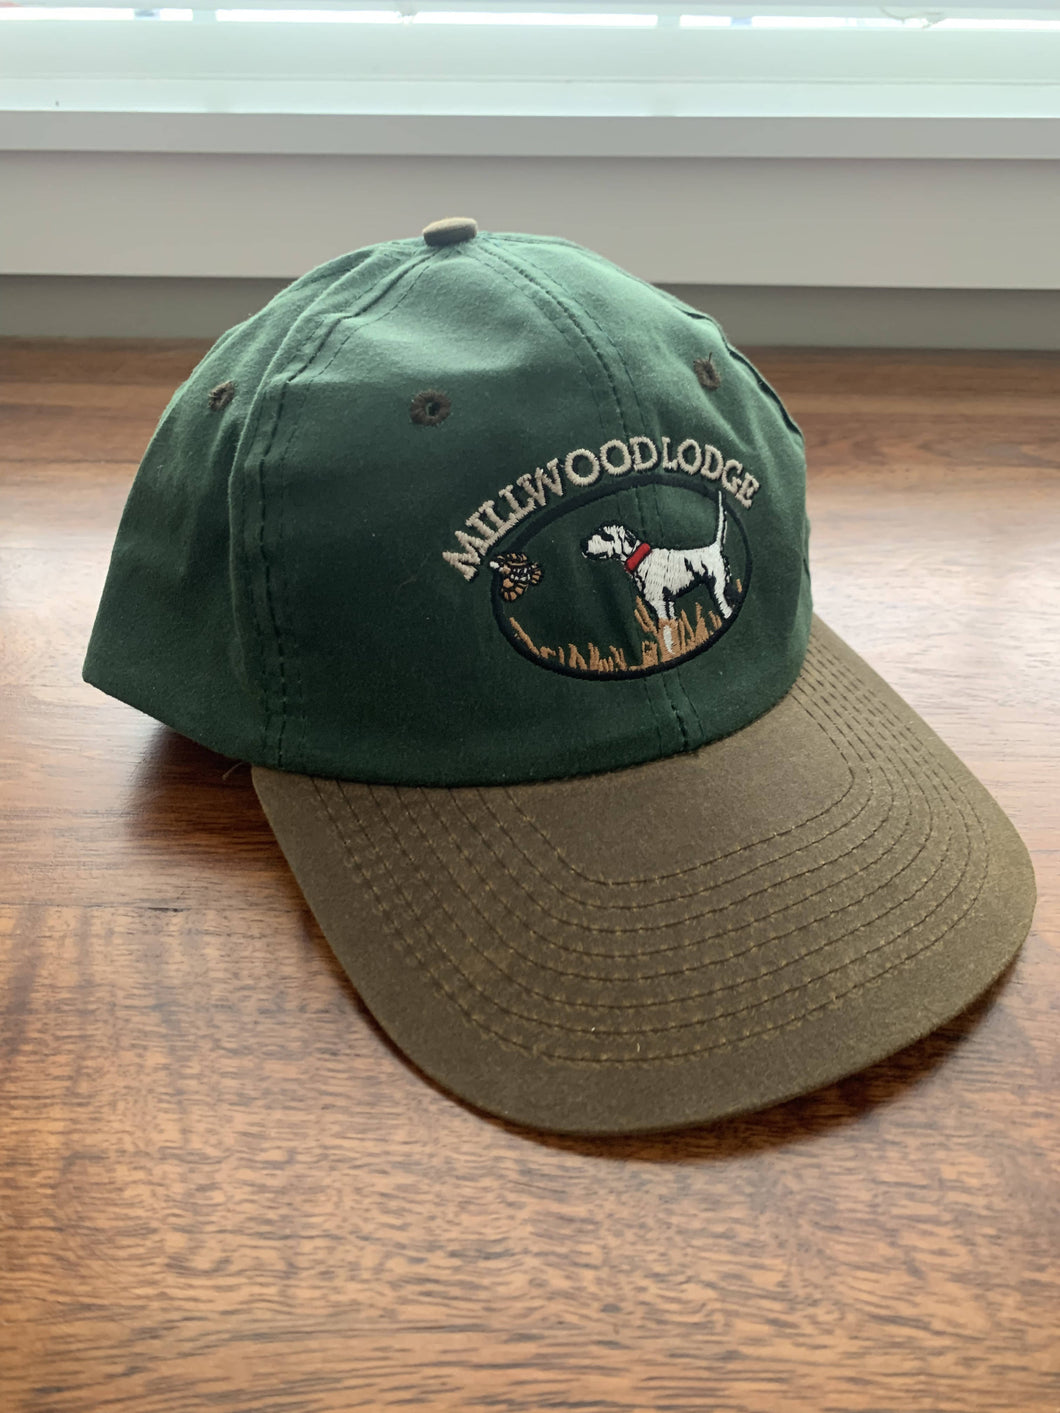 Millwood Lodge waxed hat